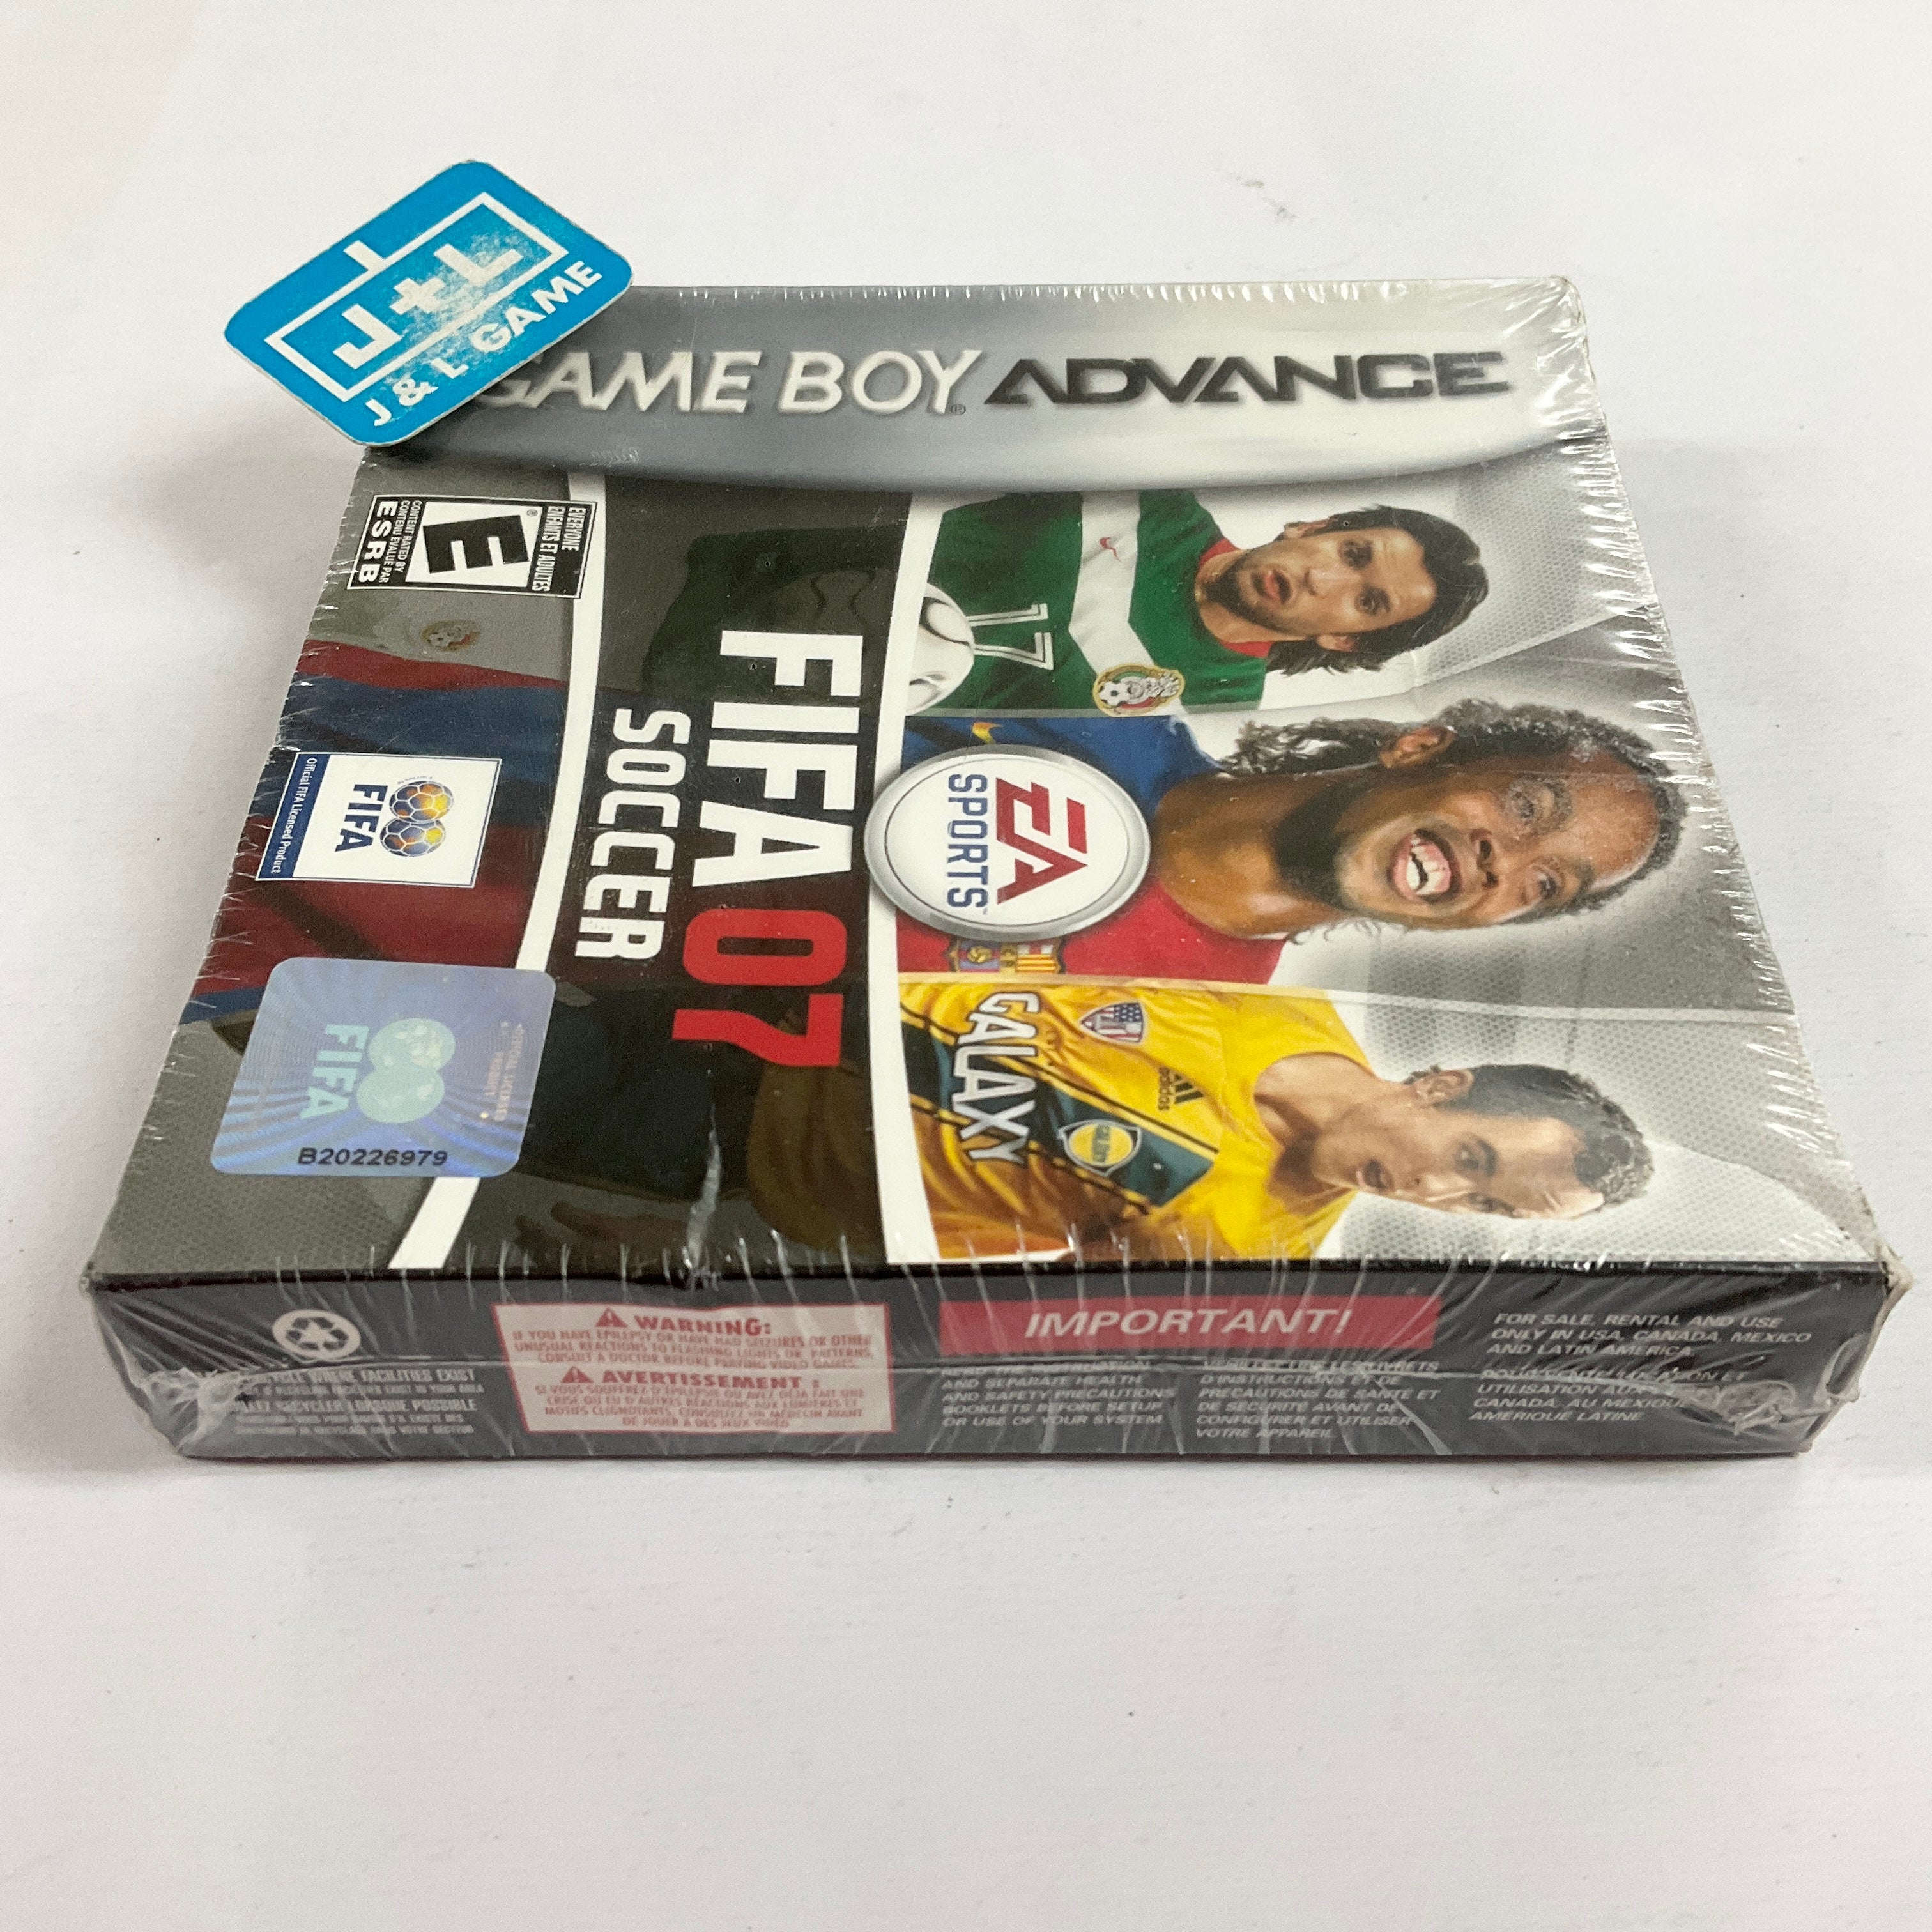 FIFA 07 Soccer - (GBA) Game Boy Advance Video Games EA Sports   